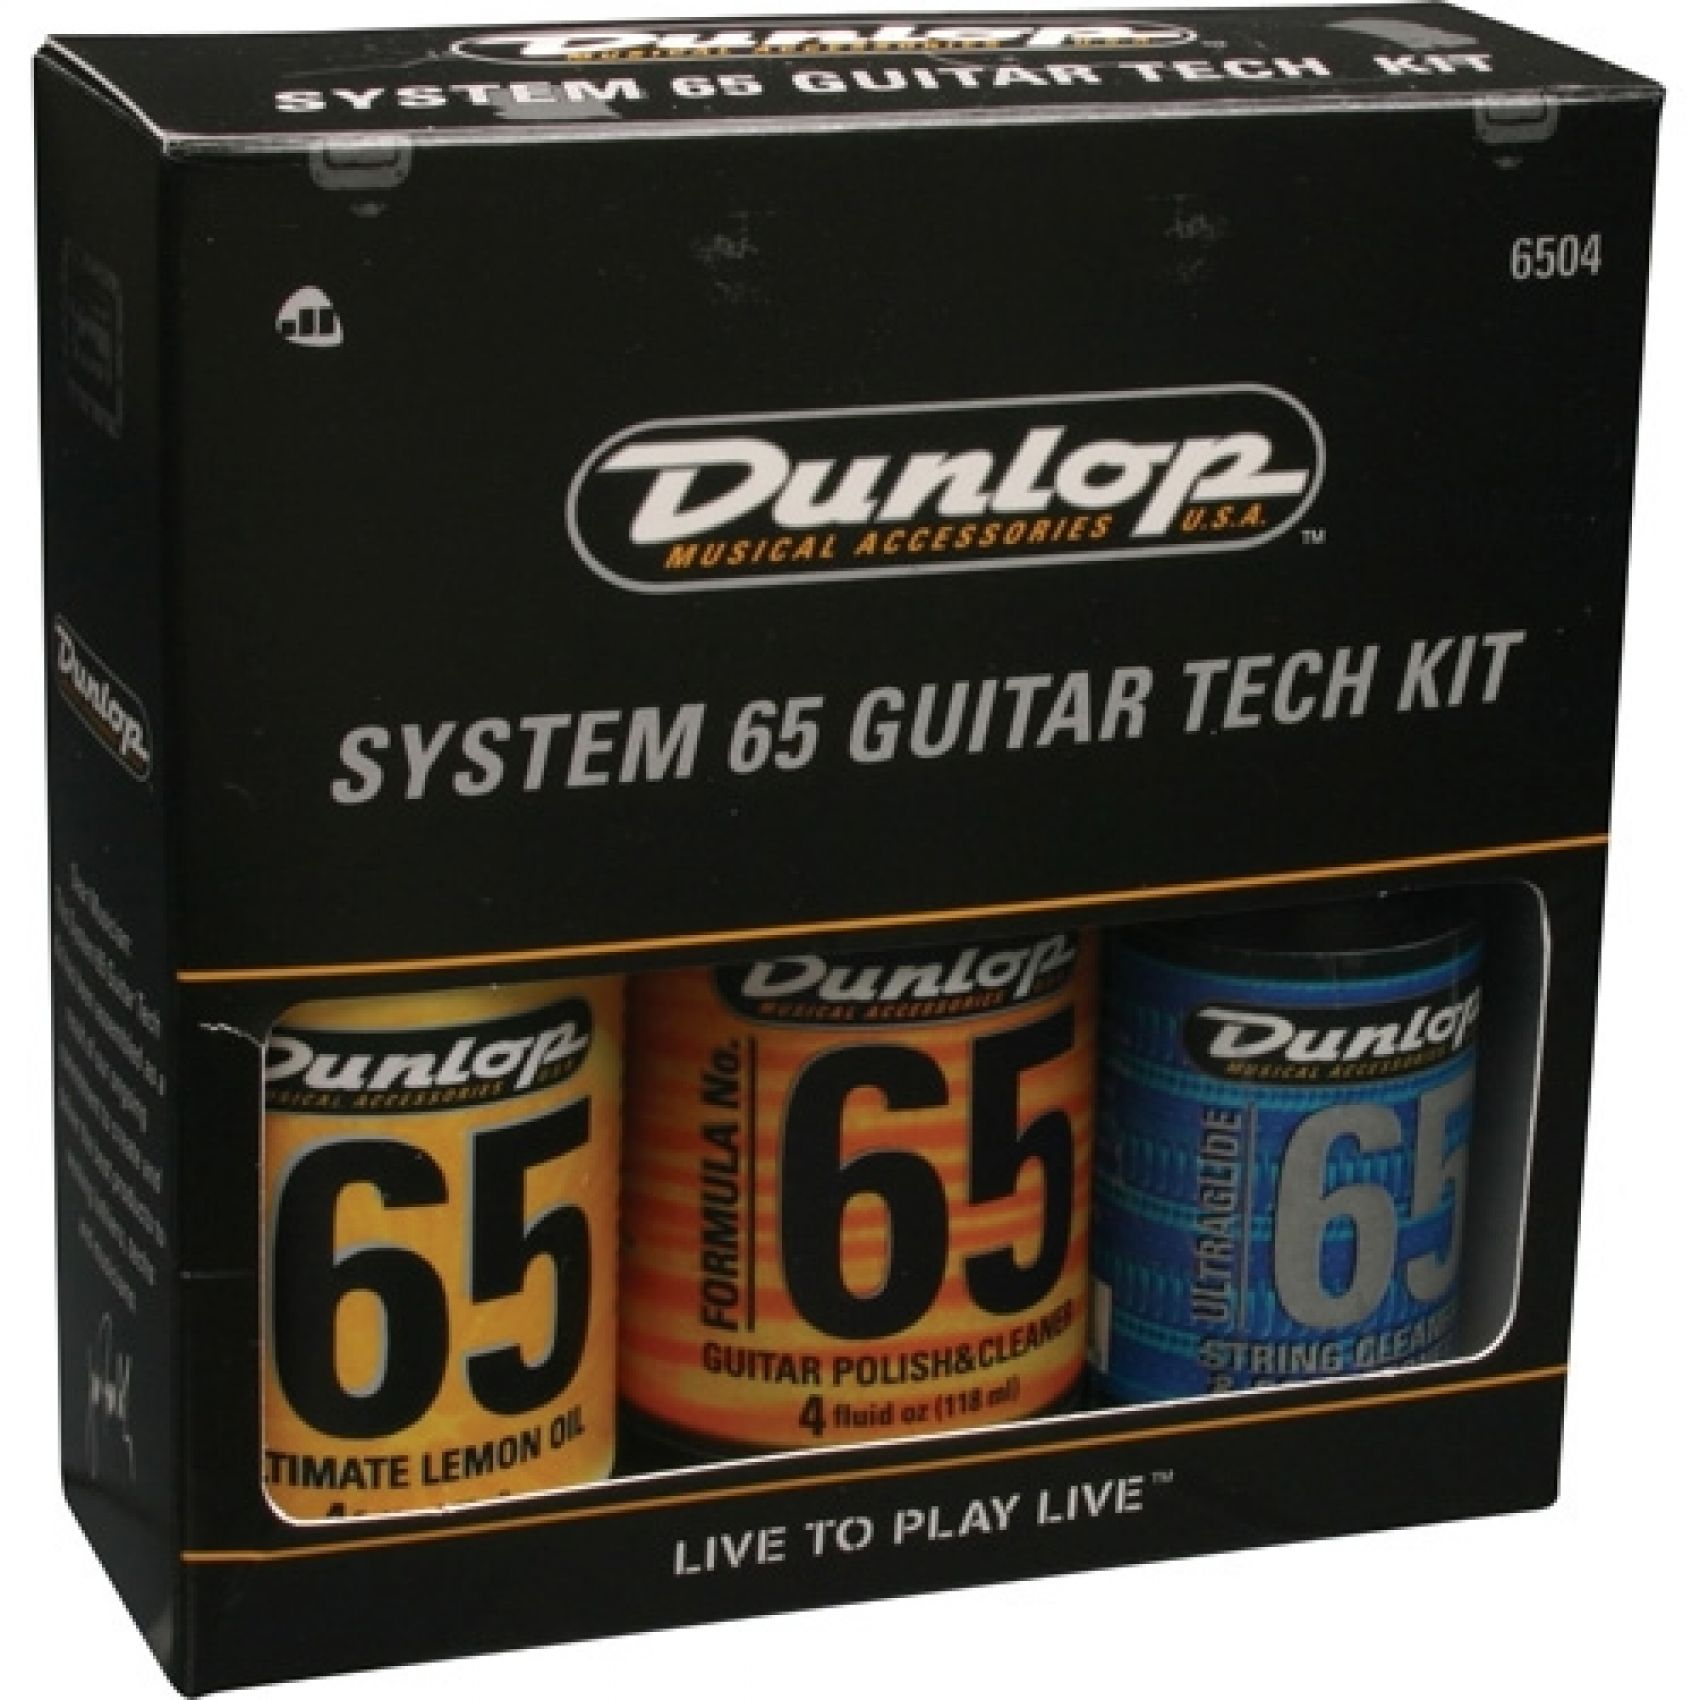 Dunlop 6504 GUITAR TECH KIT, Kit per la cura della Chitarra